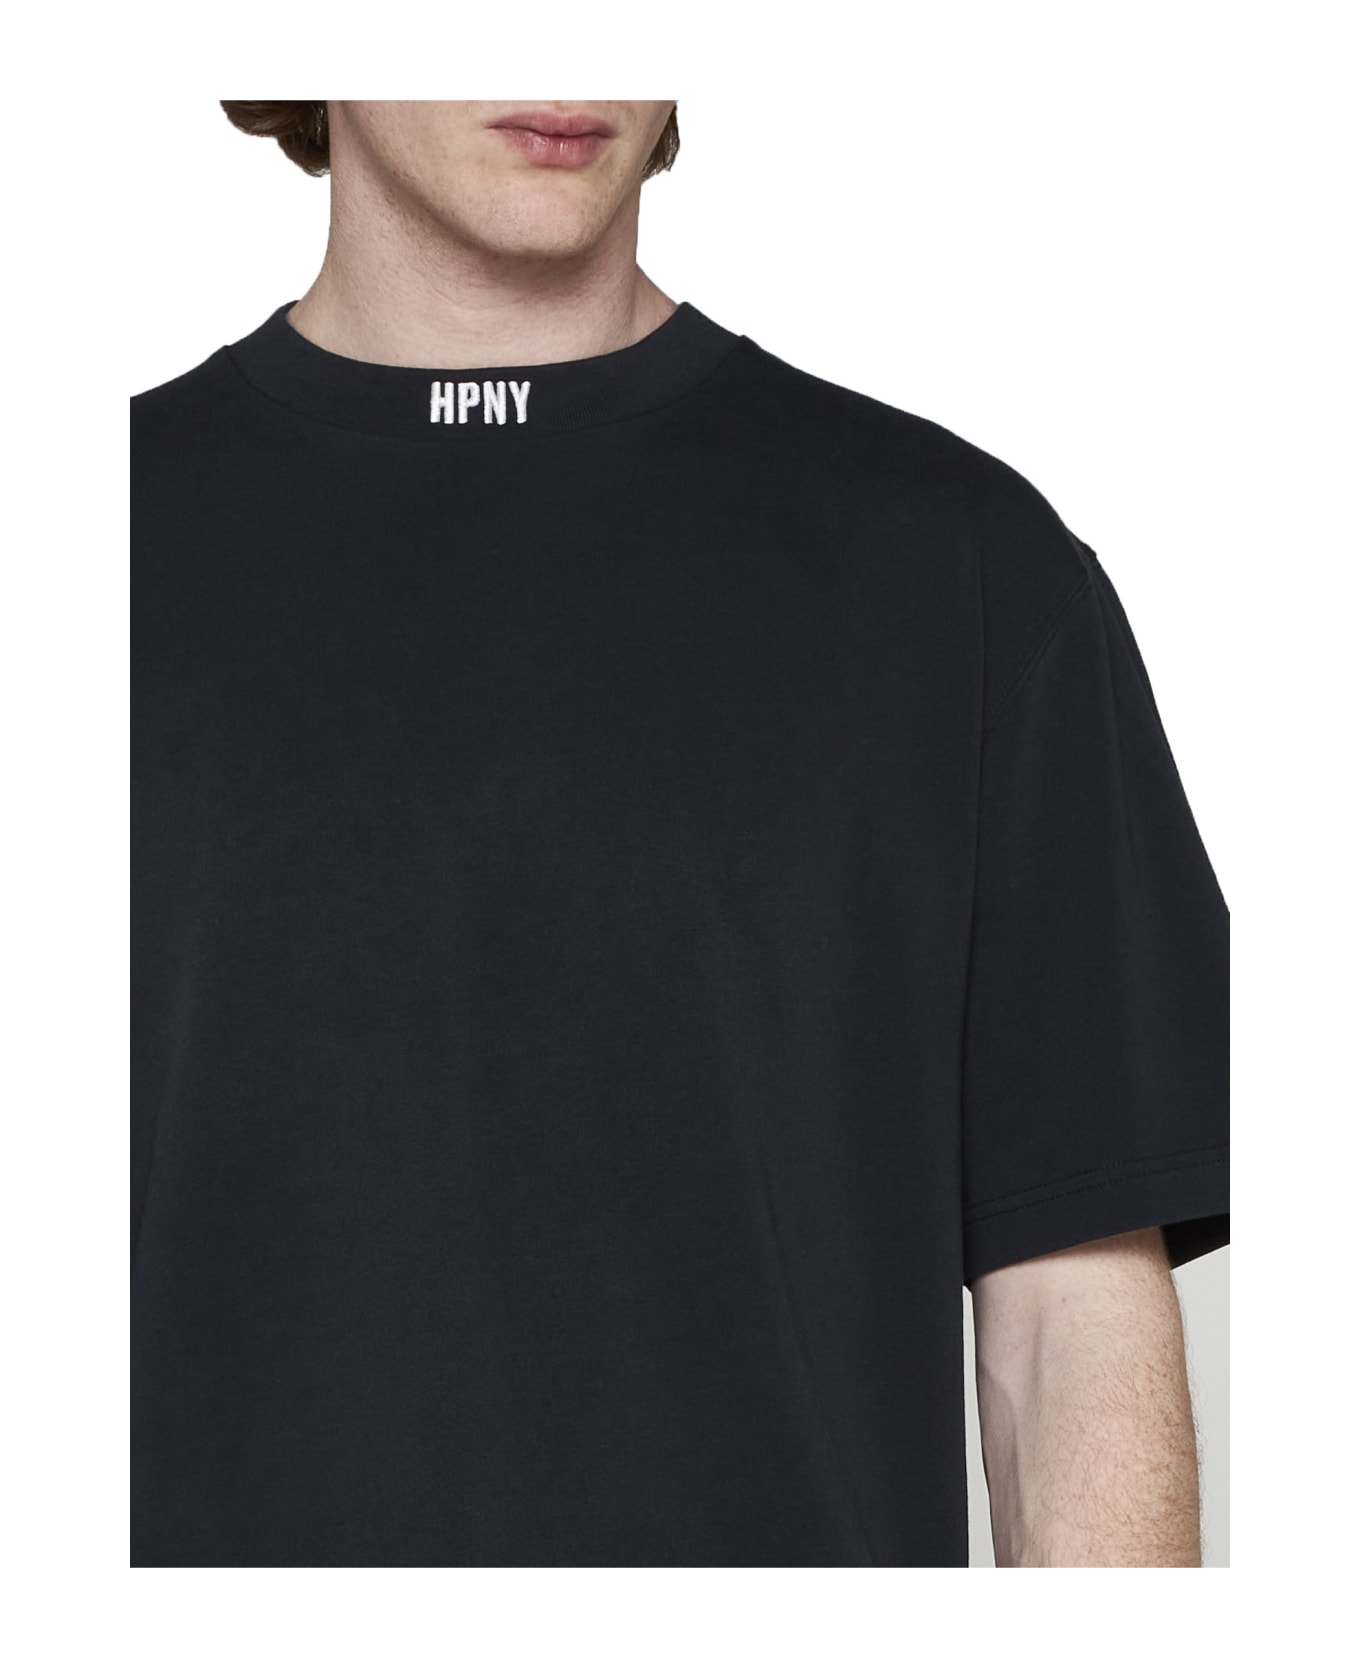 HERON PRESTON Hpny Embroidered T-shirt - Black